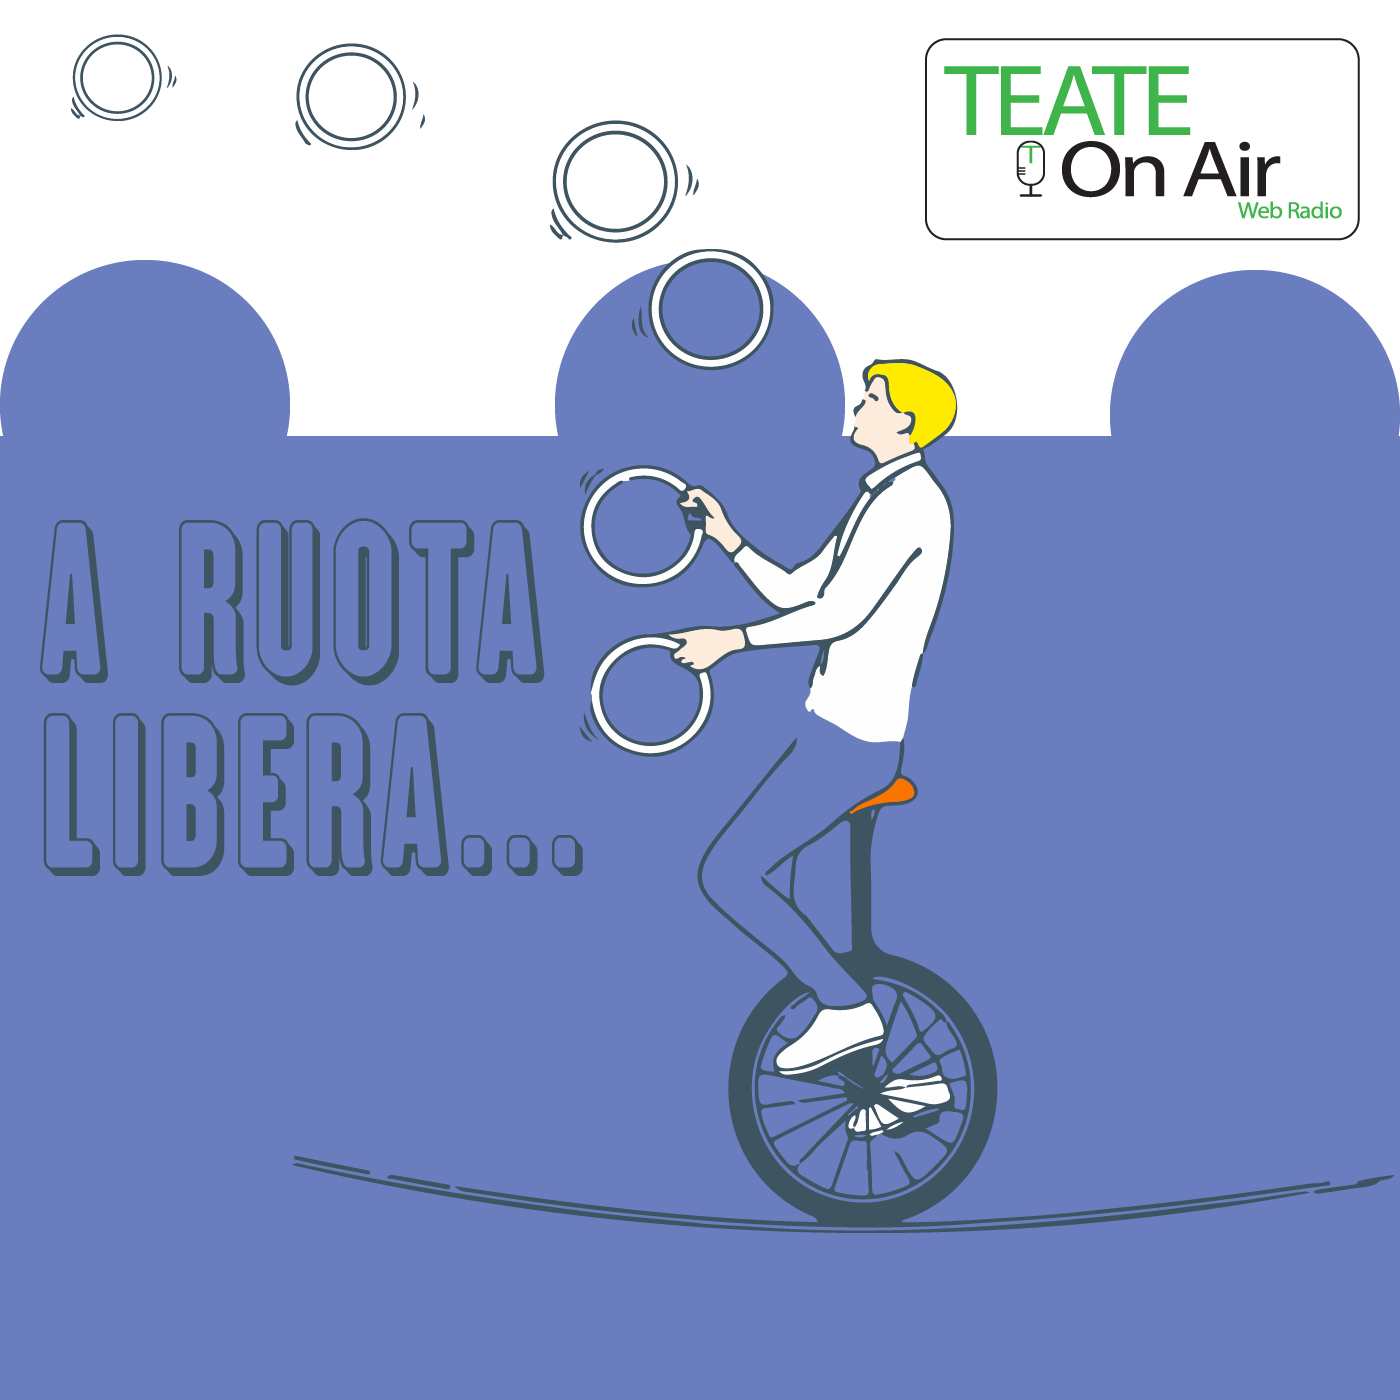 Copertina di "A Ruota Libera" + Logo ToA